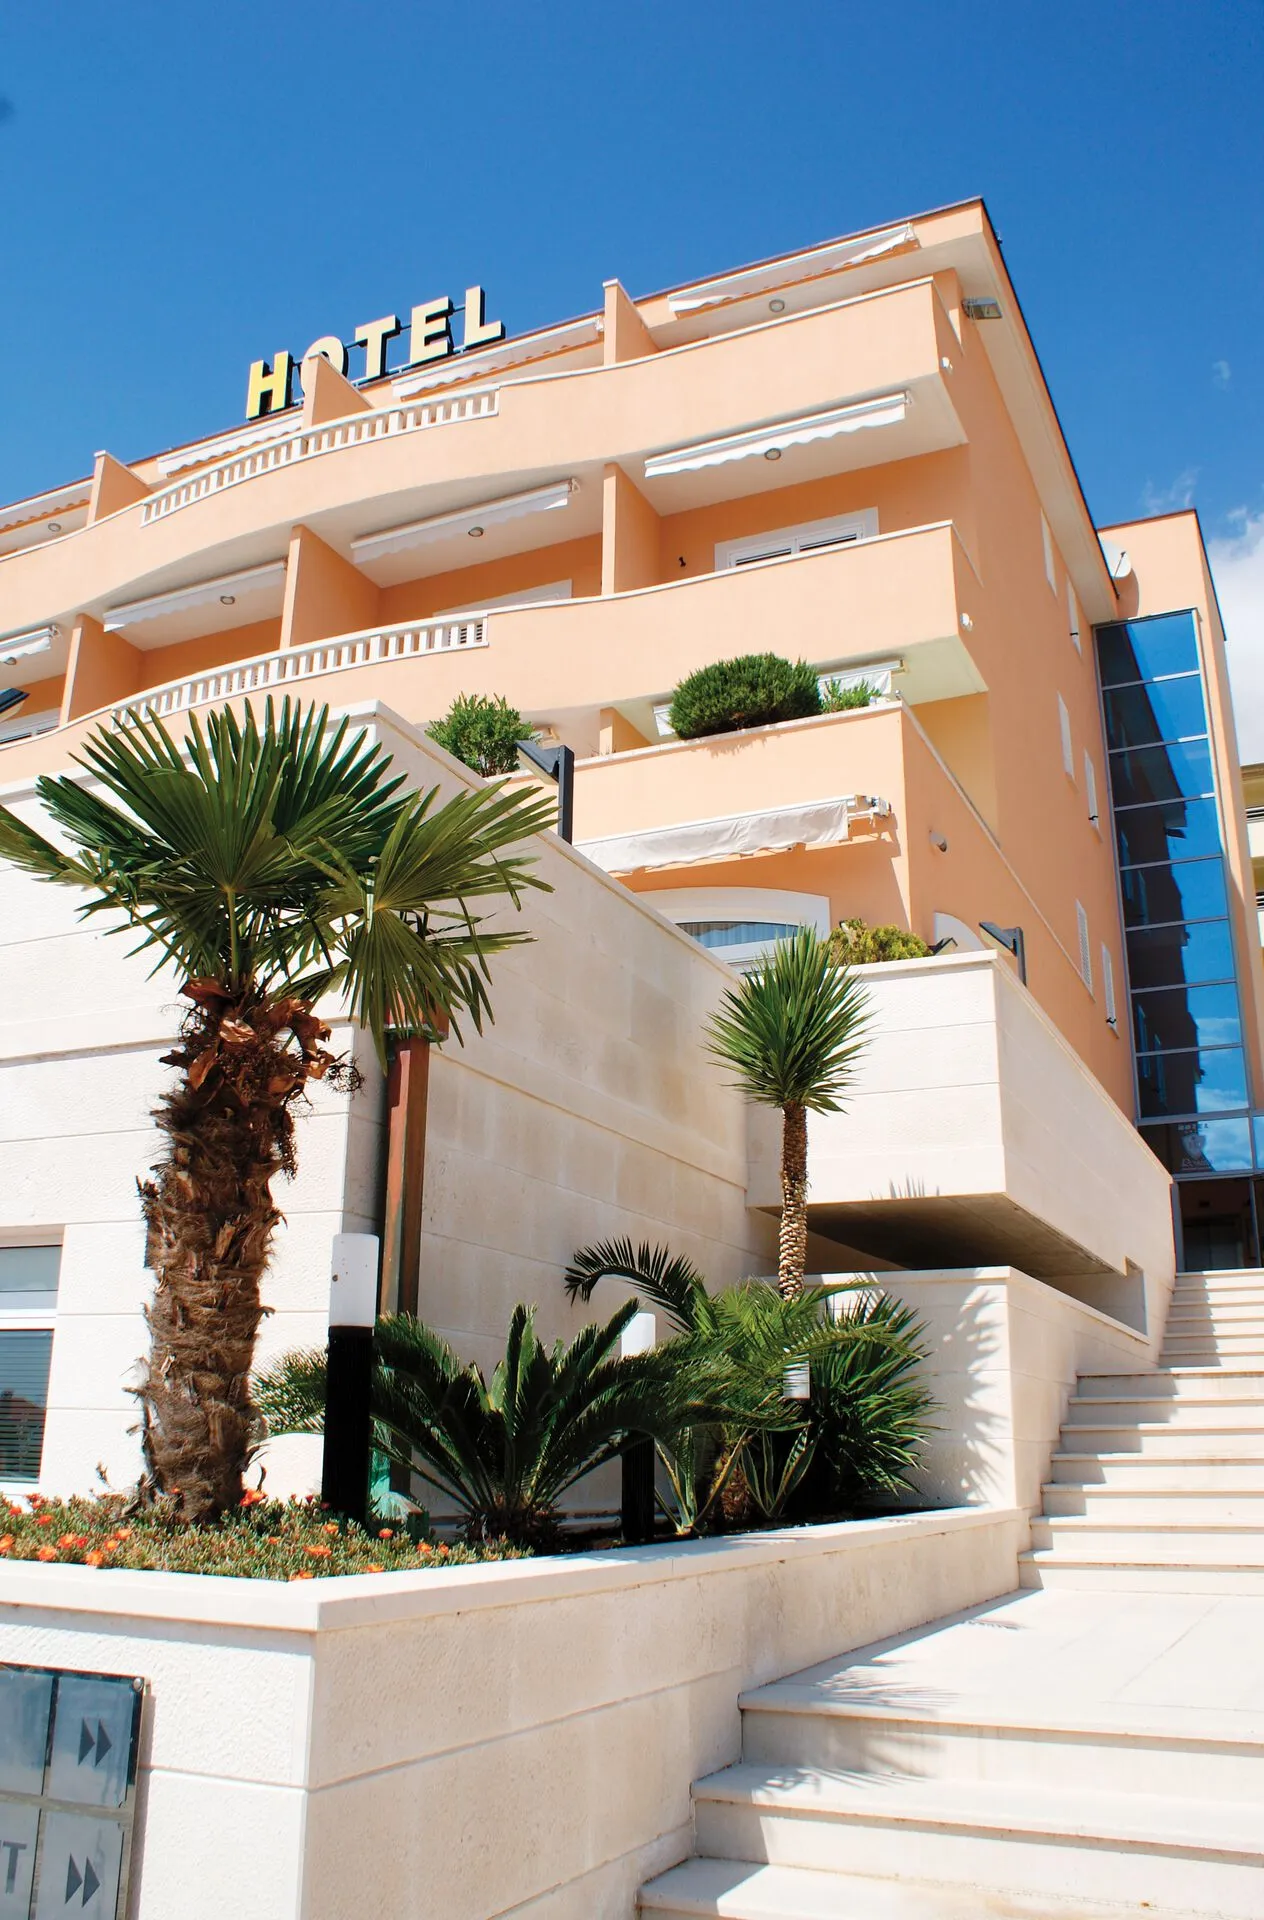 Croatie - Makarska - Hotel Rosina 4* - transfert privé inclus